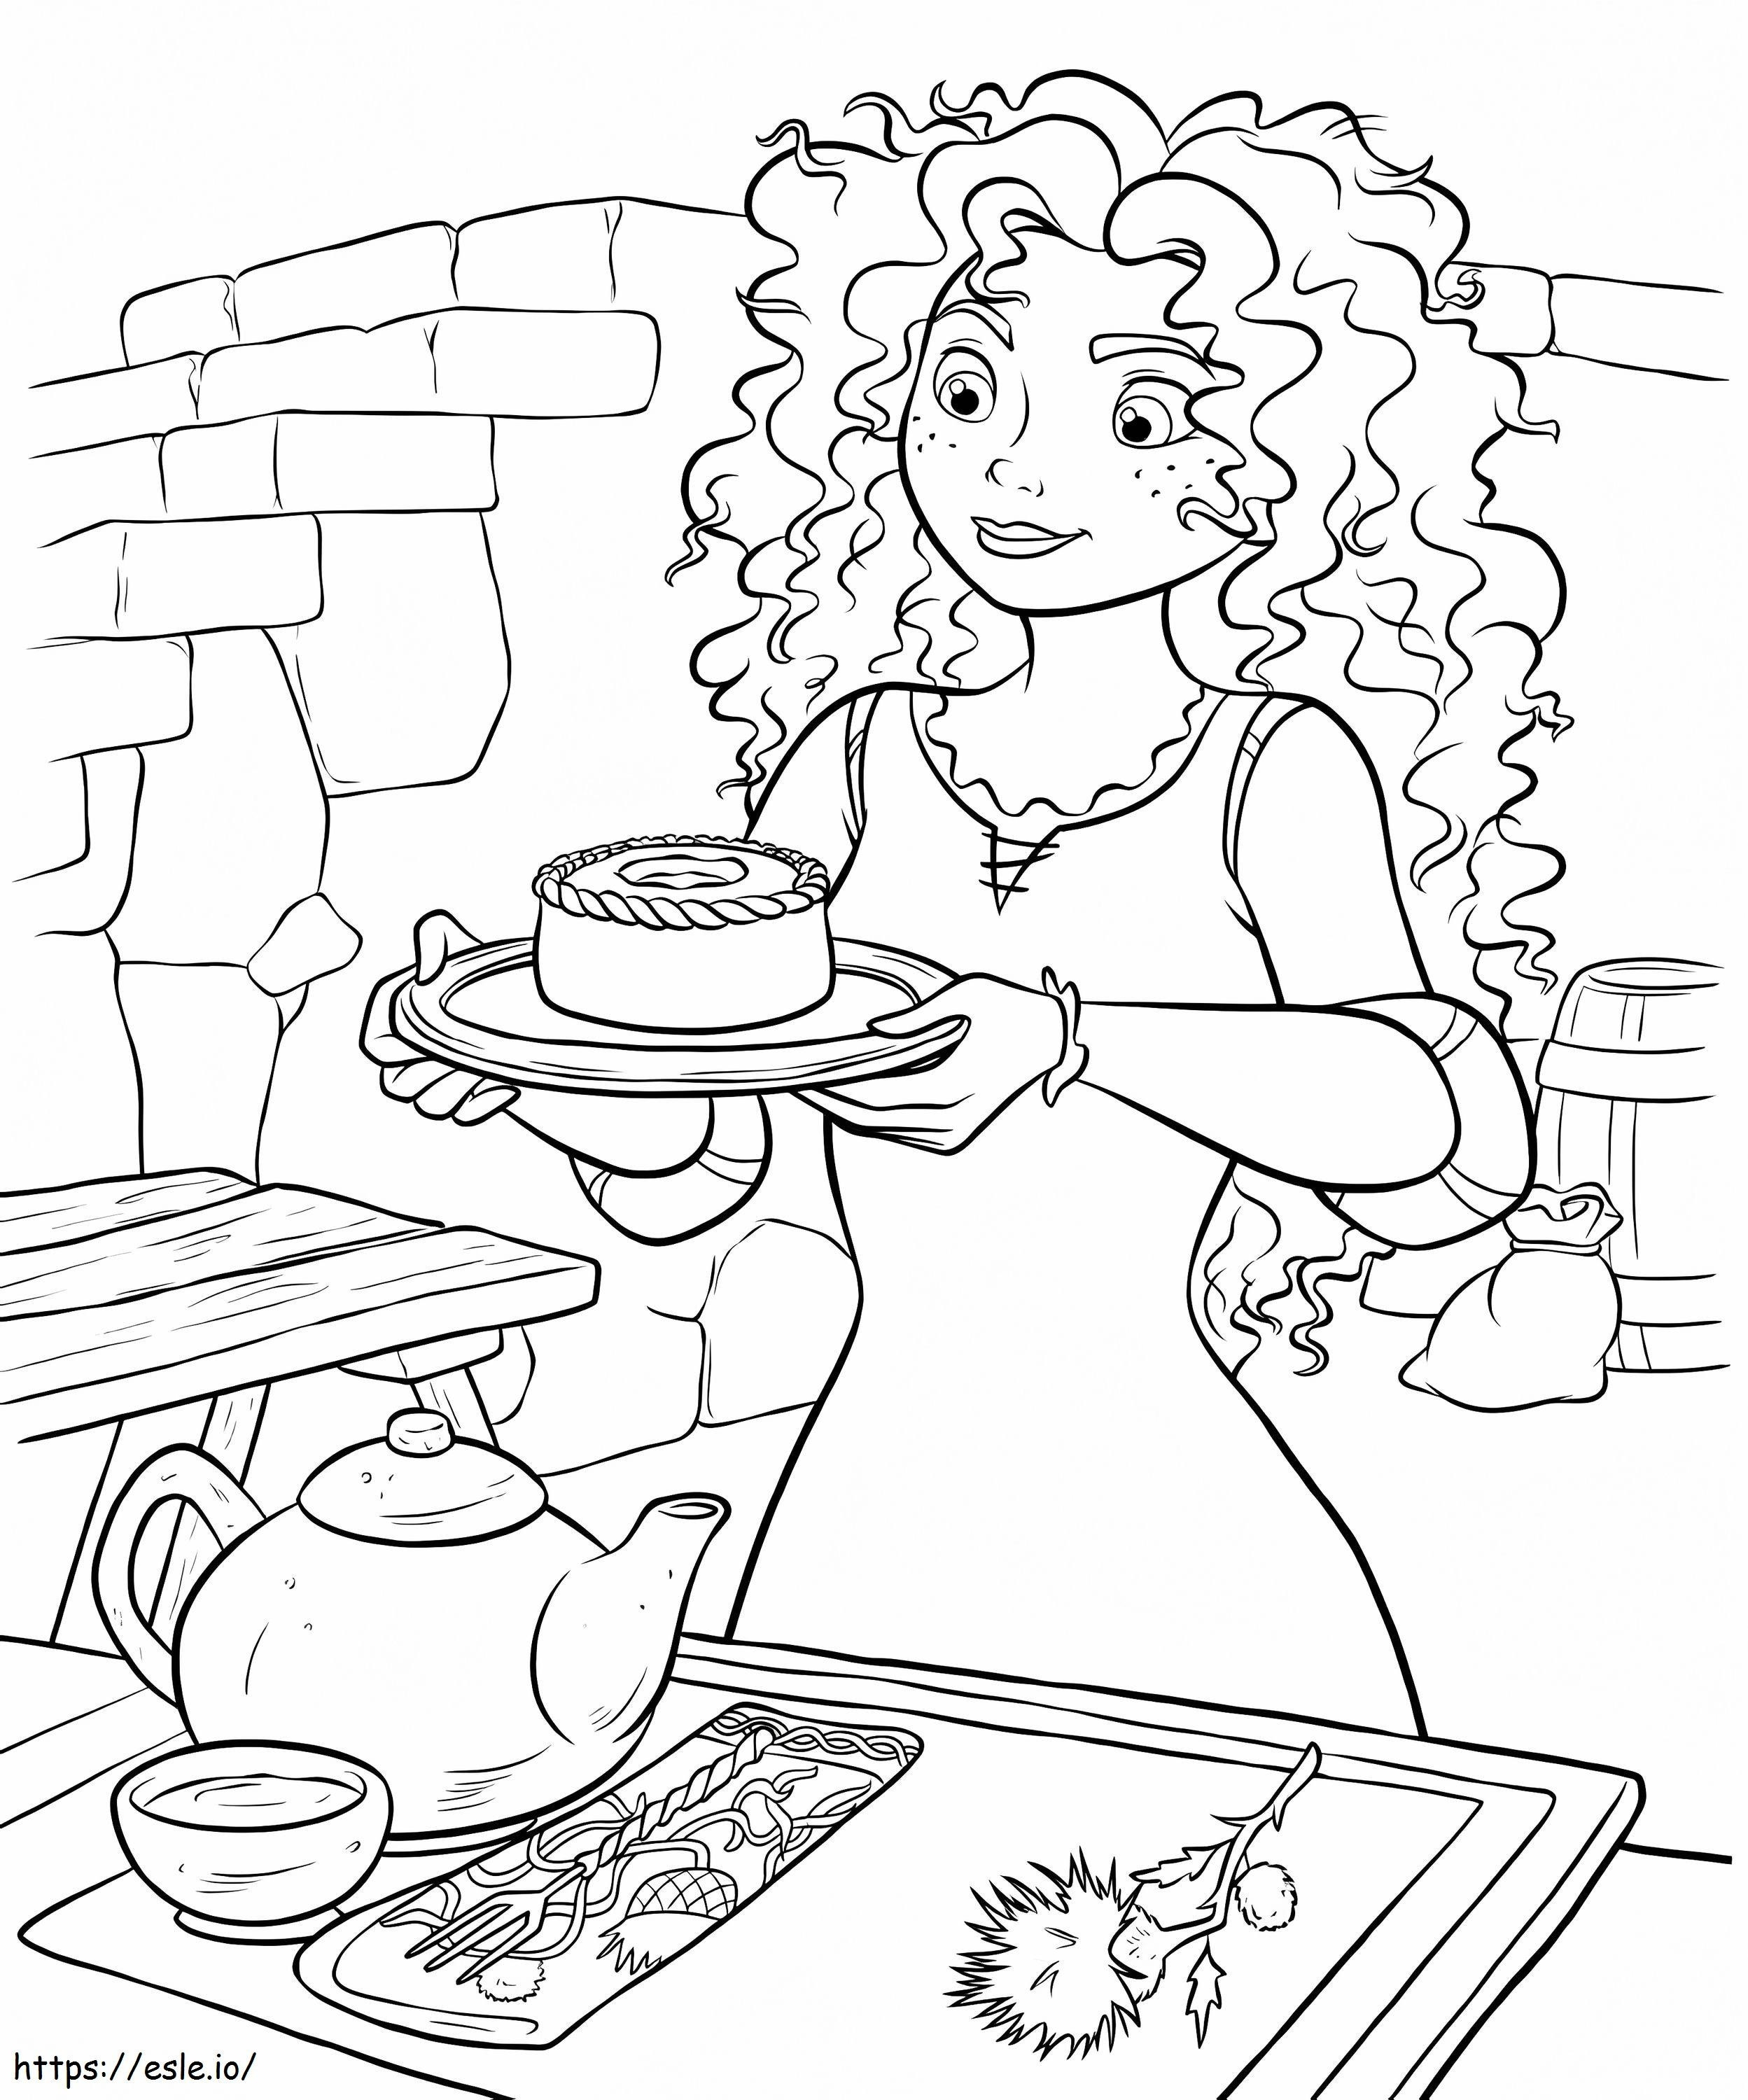 Princess Merida Makes A Pie coloring page